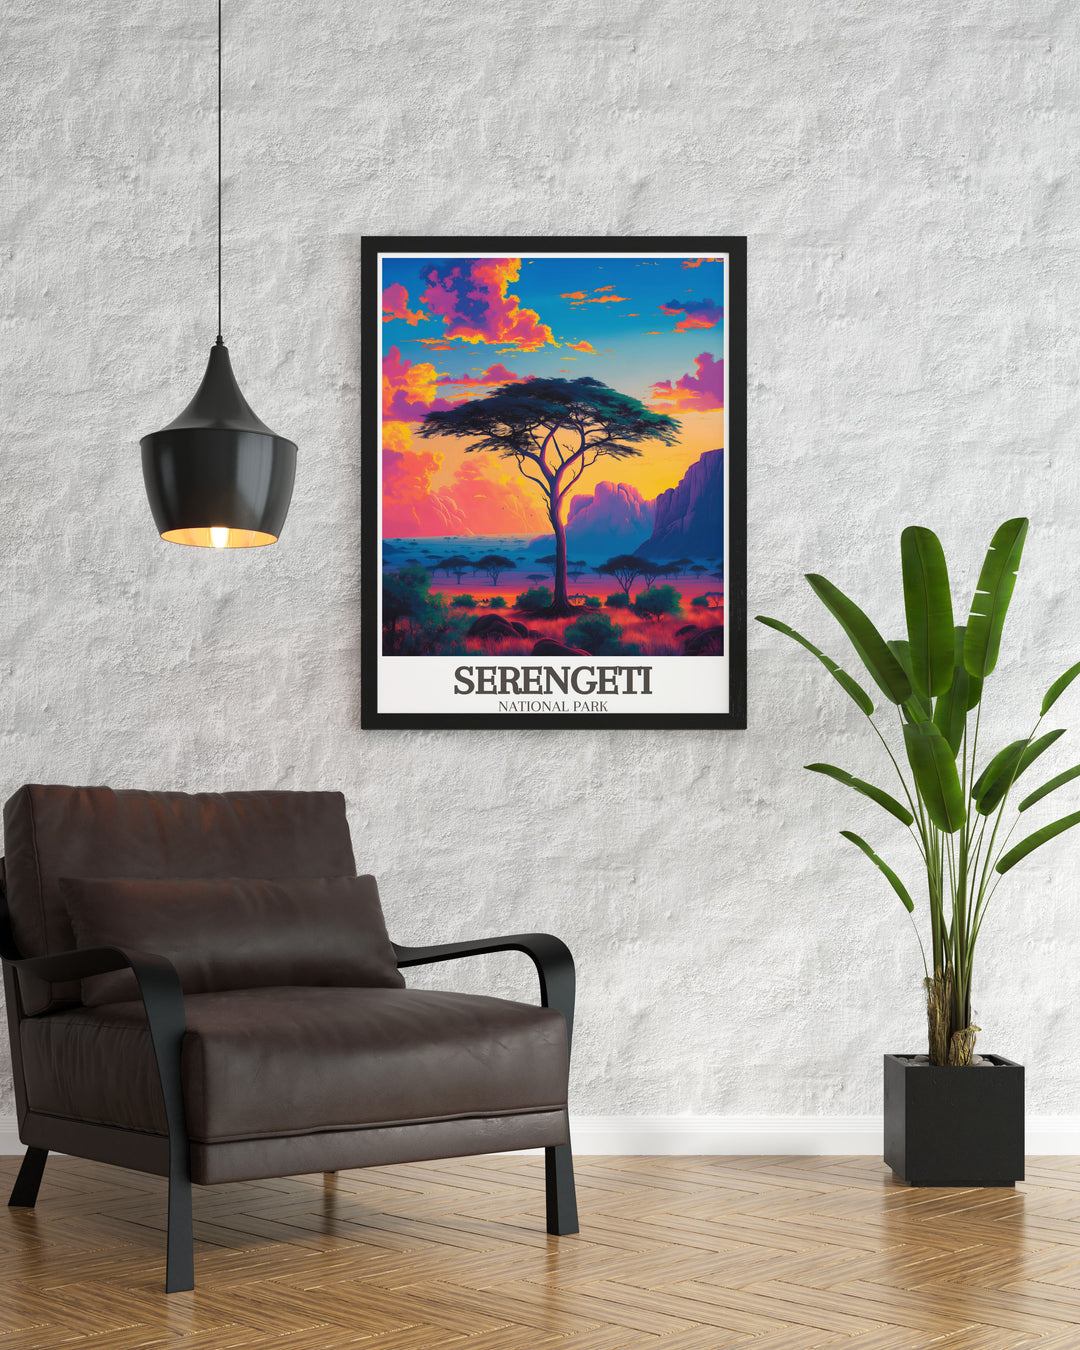 Serengeti poster with Acacia tree savanna scene highlighting the majestic beauty of Tanzania National Park an ideal piece for those who cherish African safari art